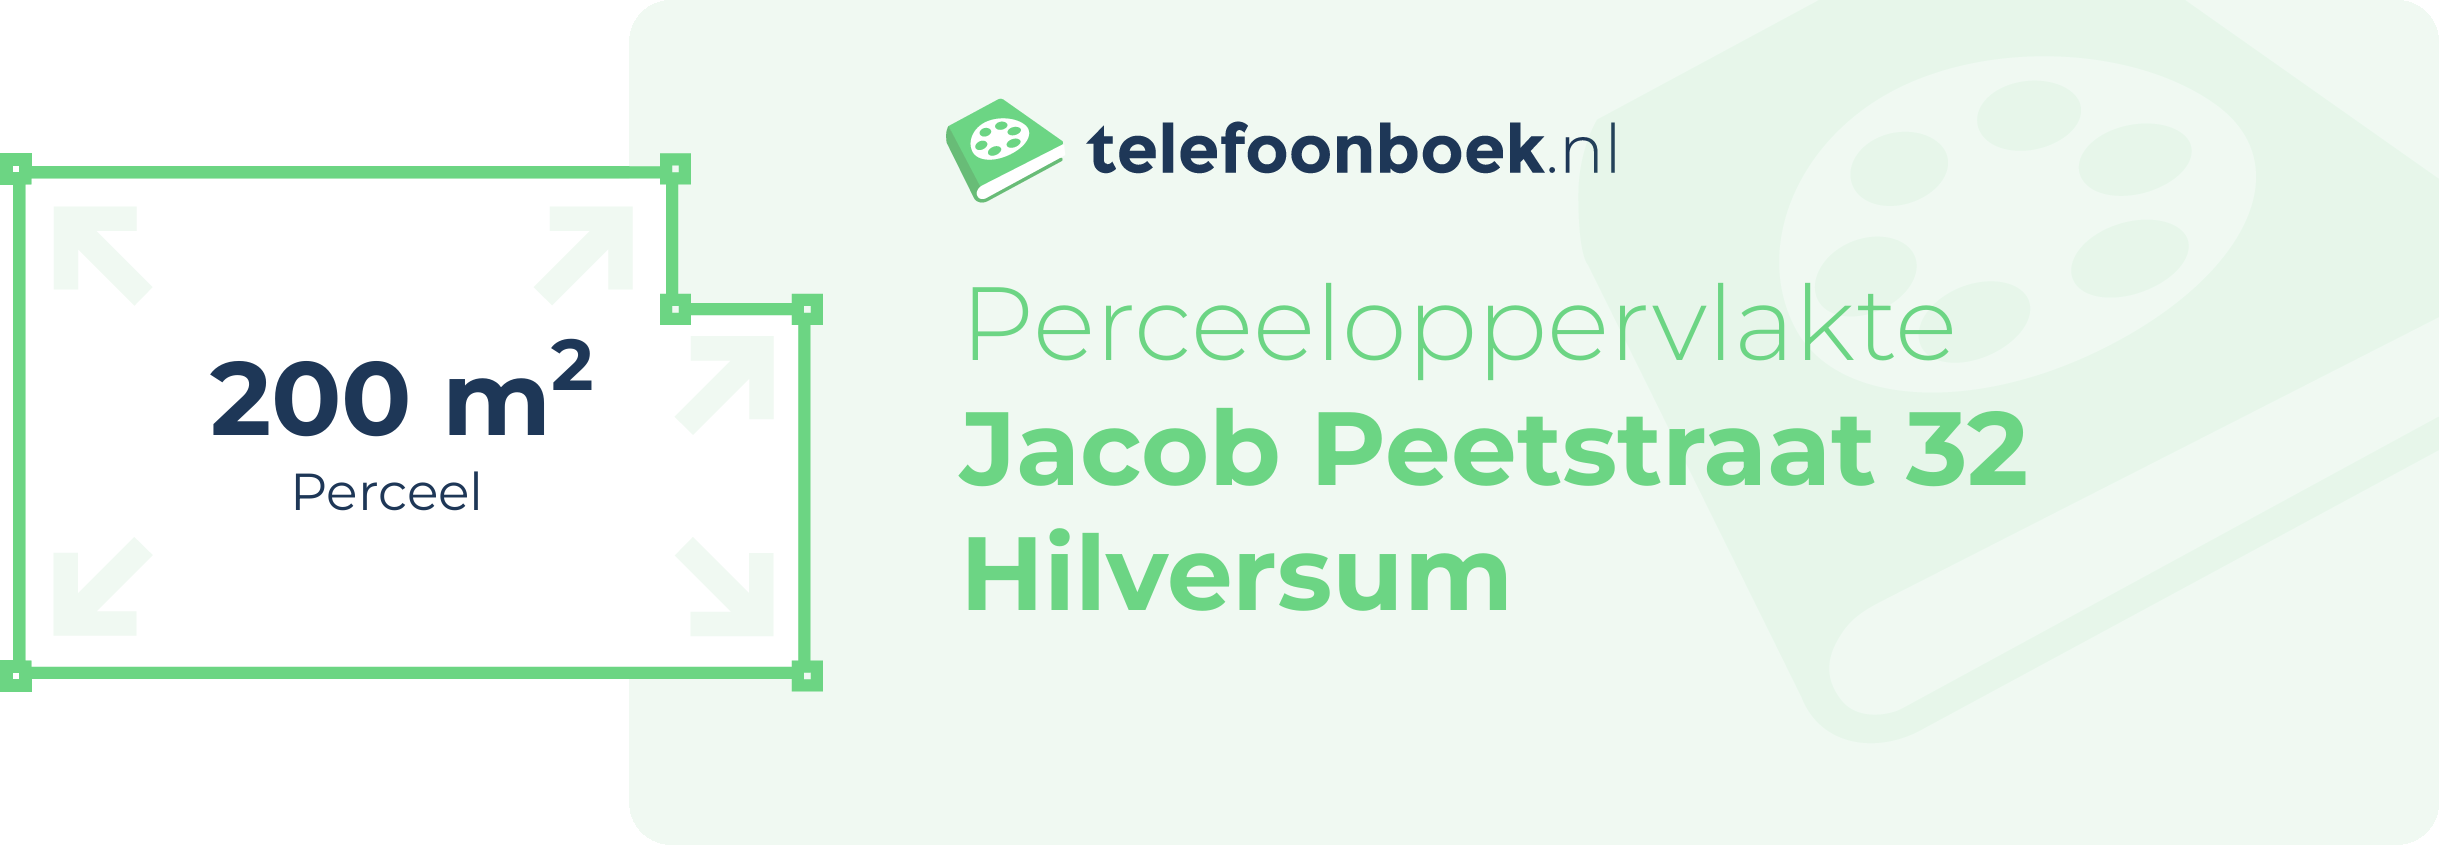 Perceeloppervlakte Jacob Peetstraat 32 Hilversum